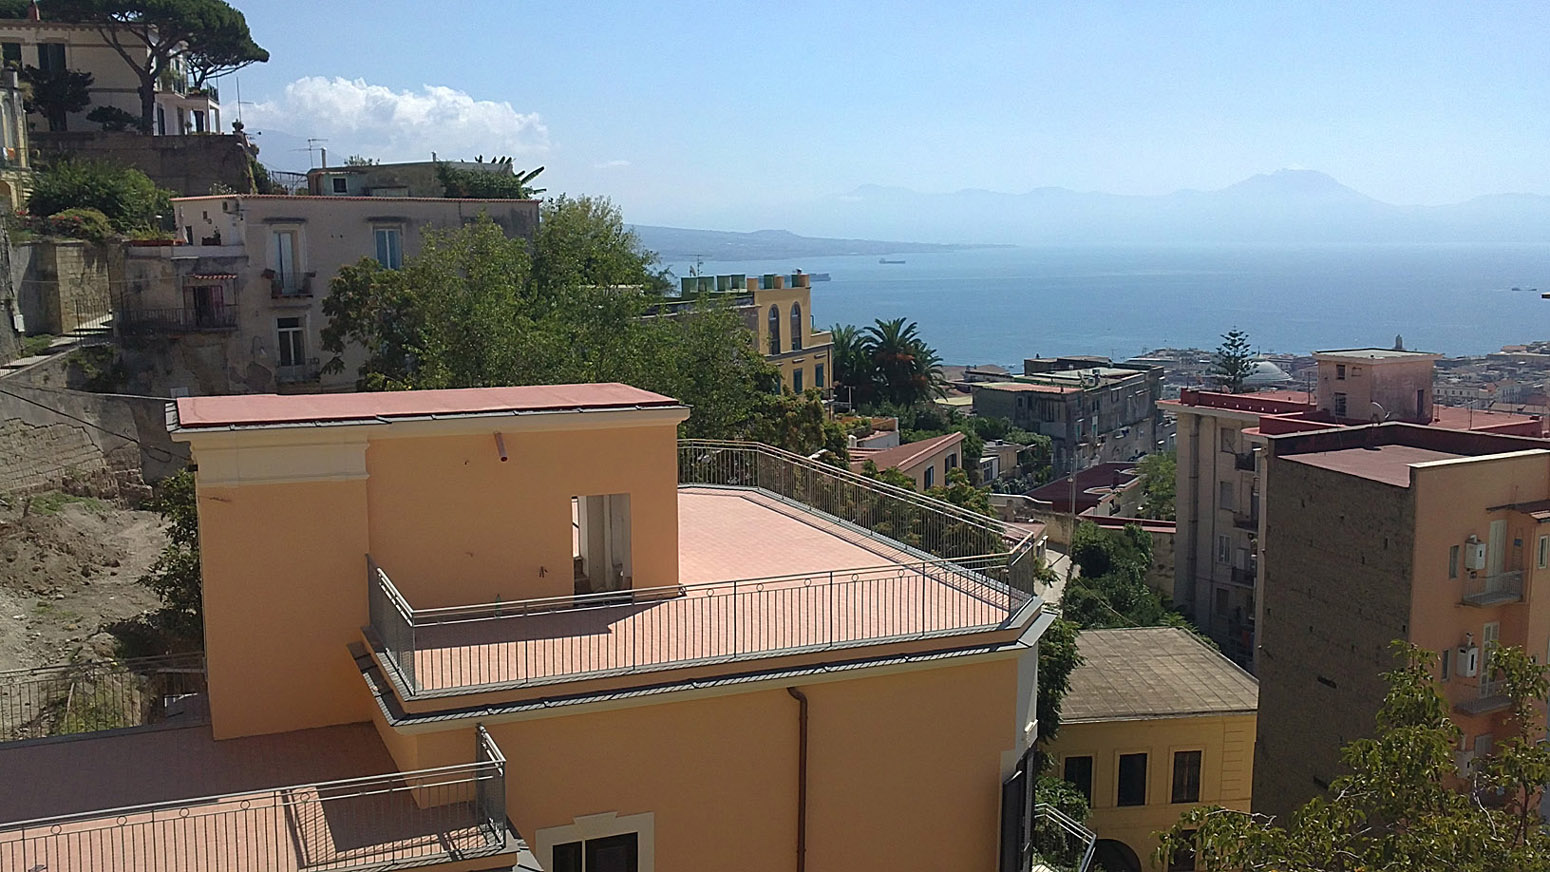 Neapel Stadt Meer und Berge